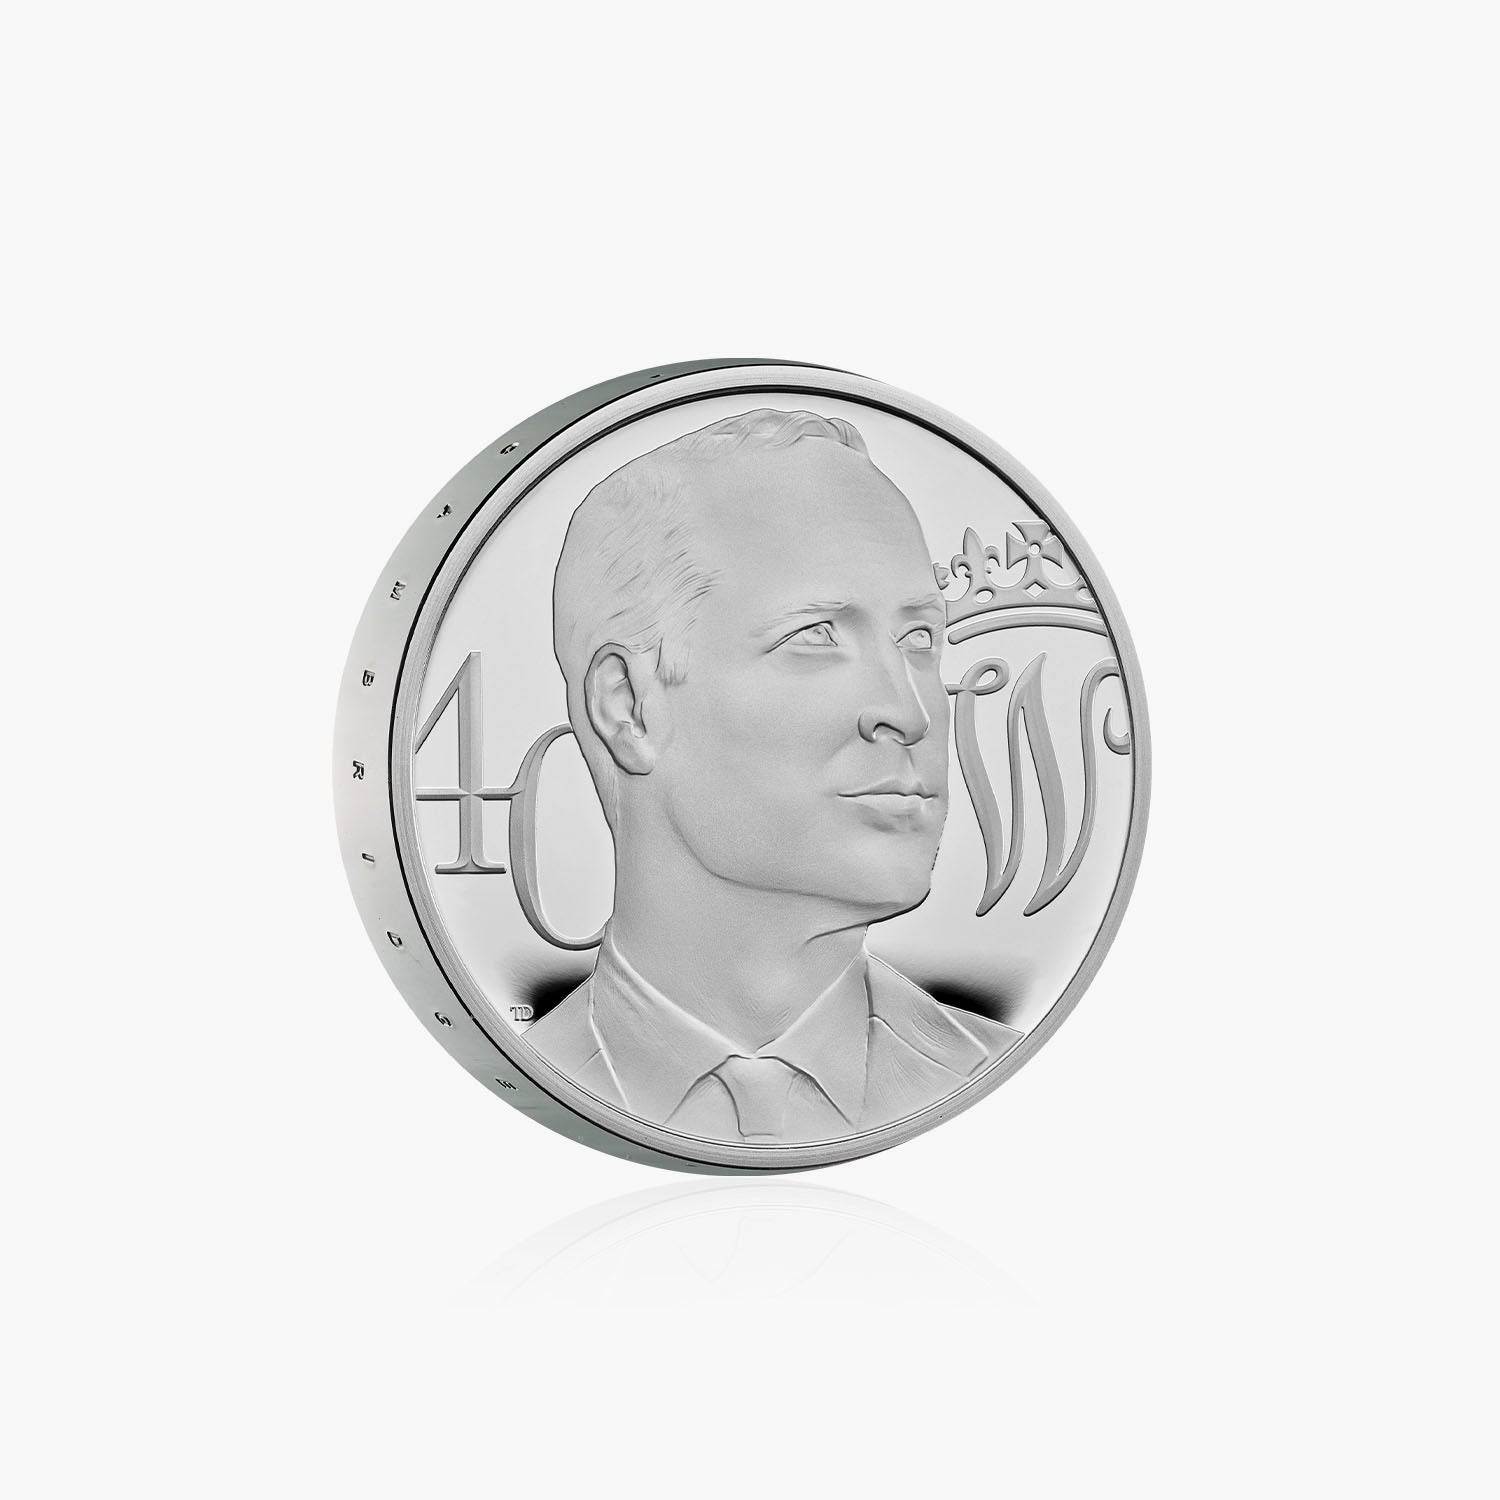 40th Birthday of HRH Prince William, Duke of Cambridge 2022 UK £5 Silver Proof Piedfort Coin